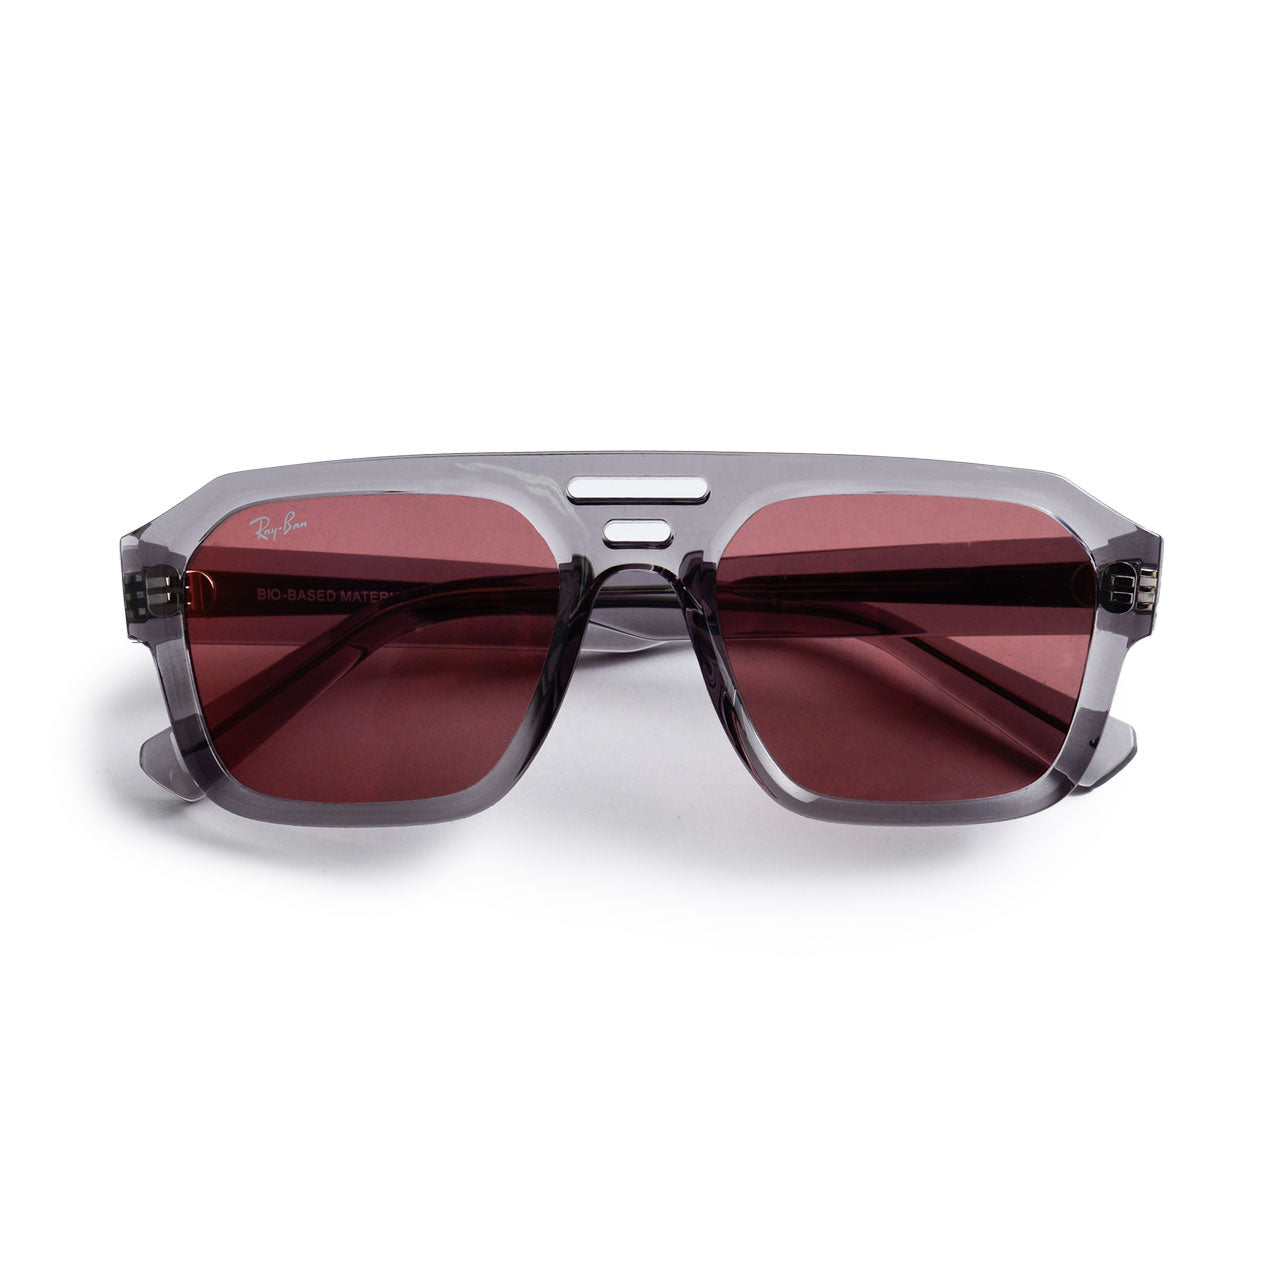 Ray-Ban Corrigan Bio-Based Sunglasses | Uncrate